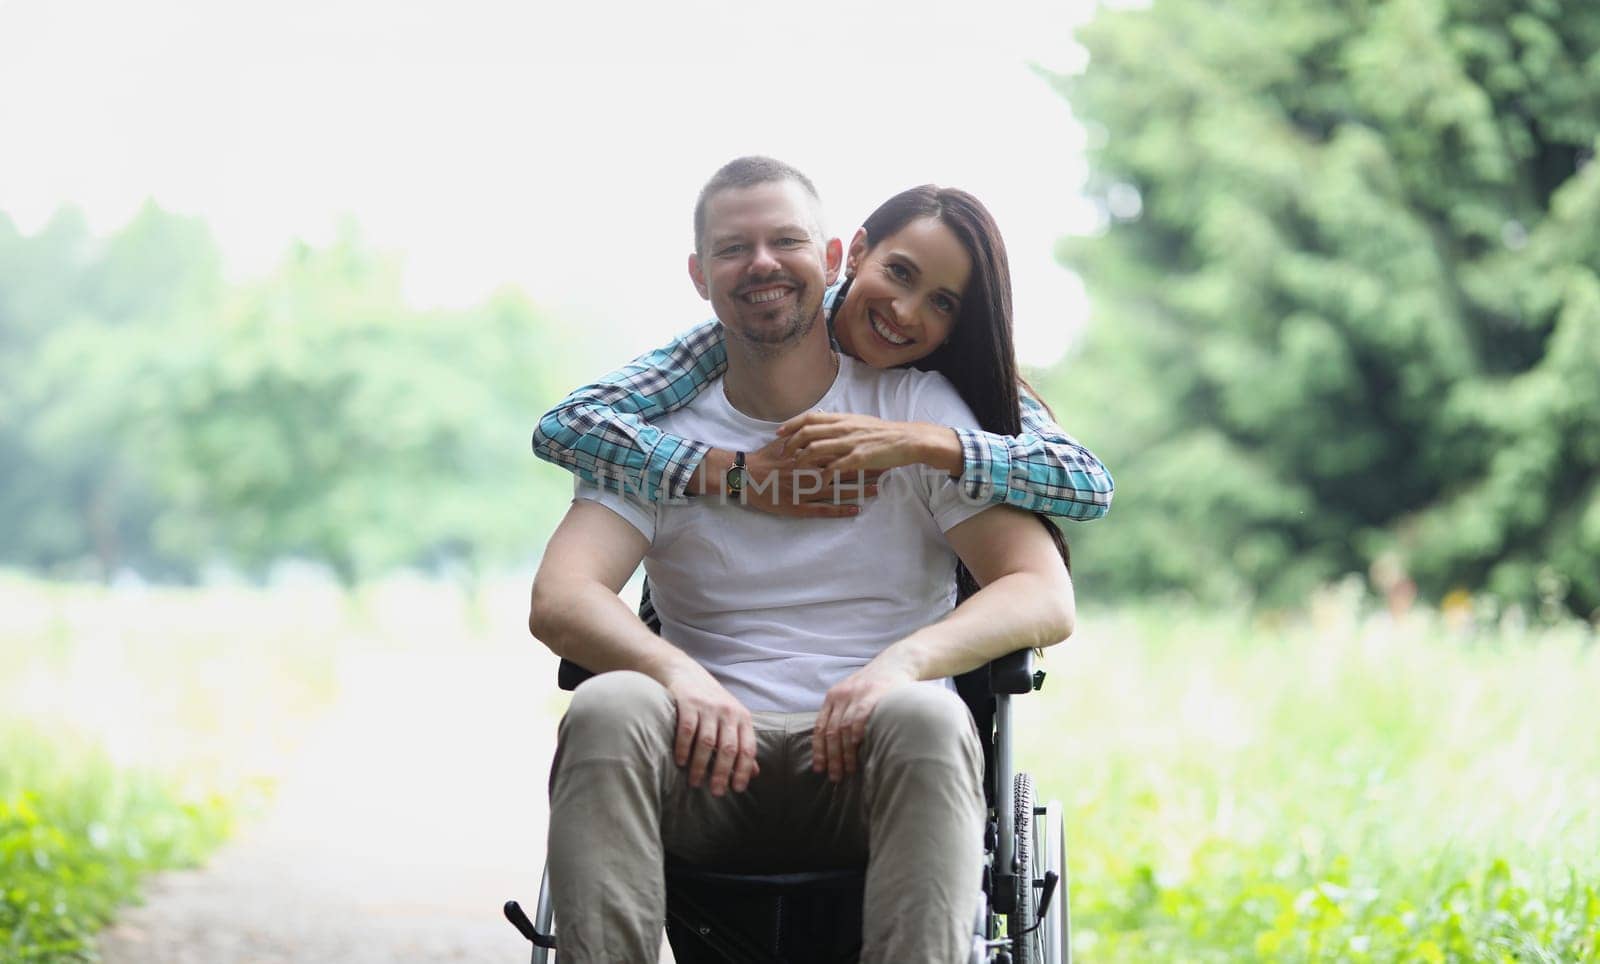 Woman hugging man in wheelchair in park portrait by kuprevich